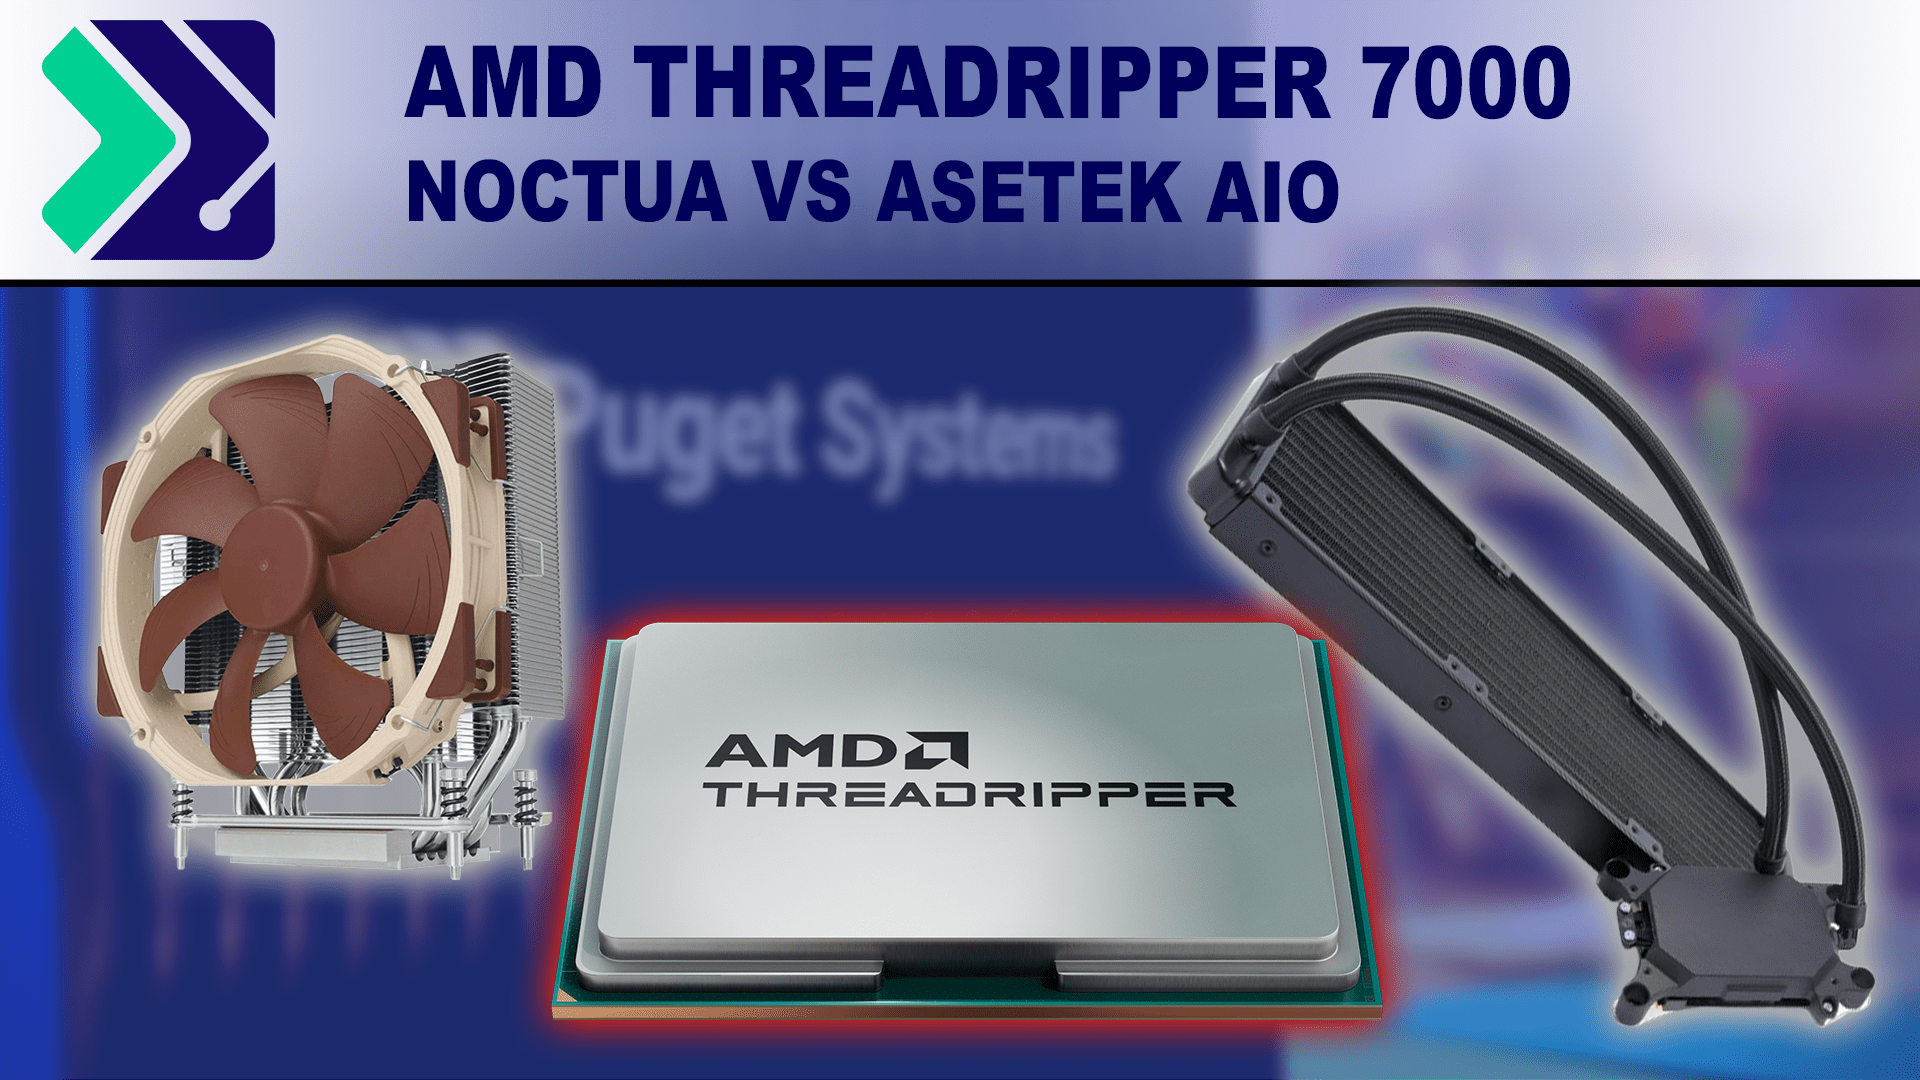 AMD Threadripper 7000 Cooler Performance Testing - Noctua vs Asetek AIO